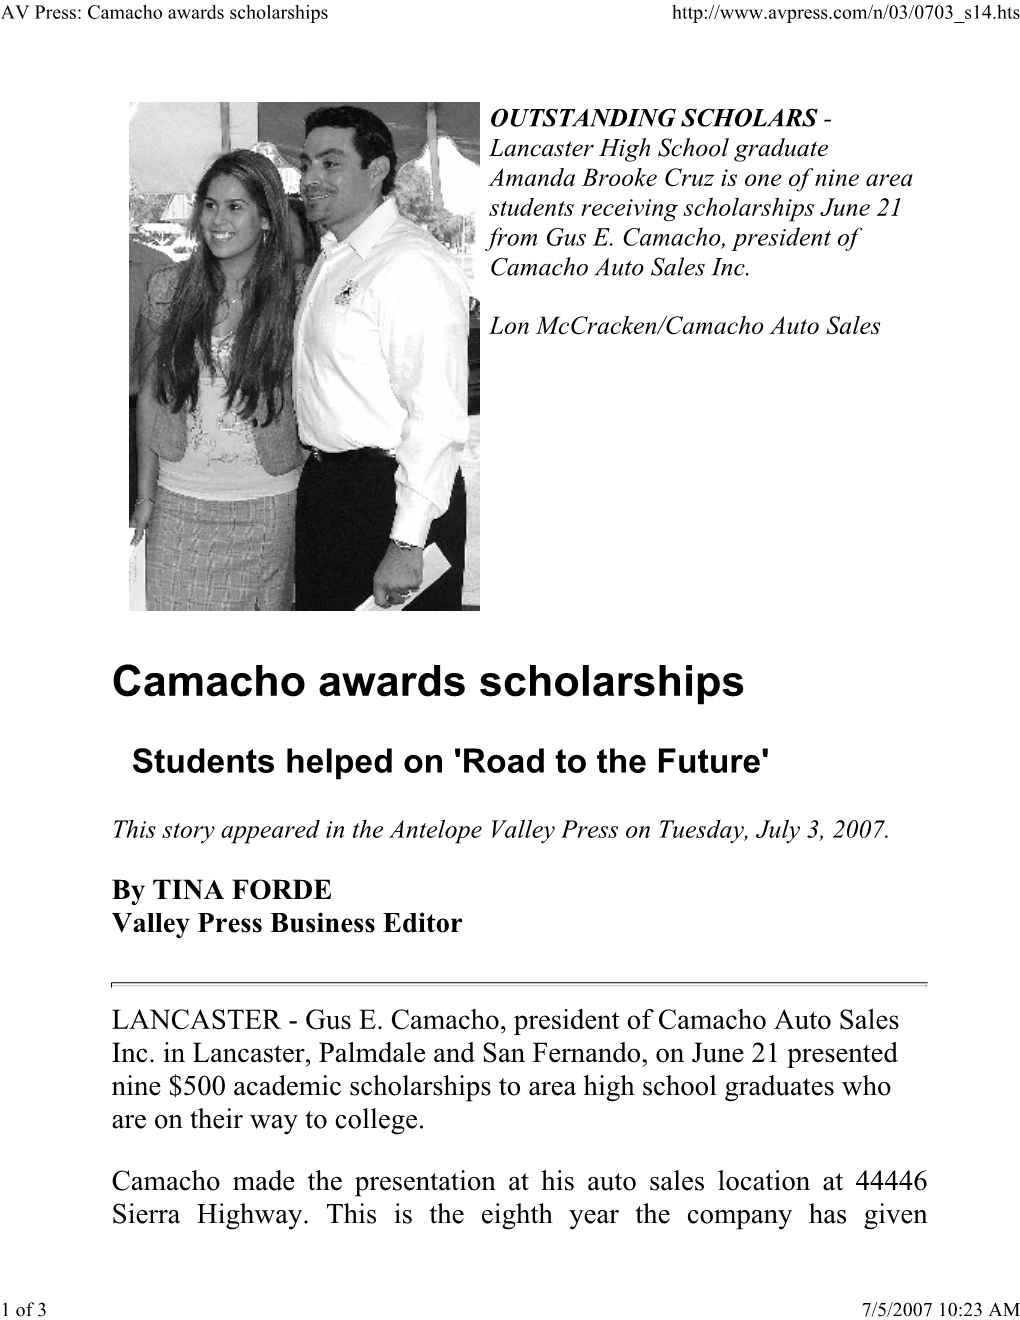 AV Press: Camacho Awards Scholarships